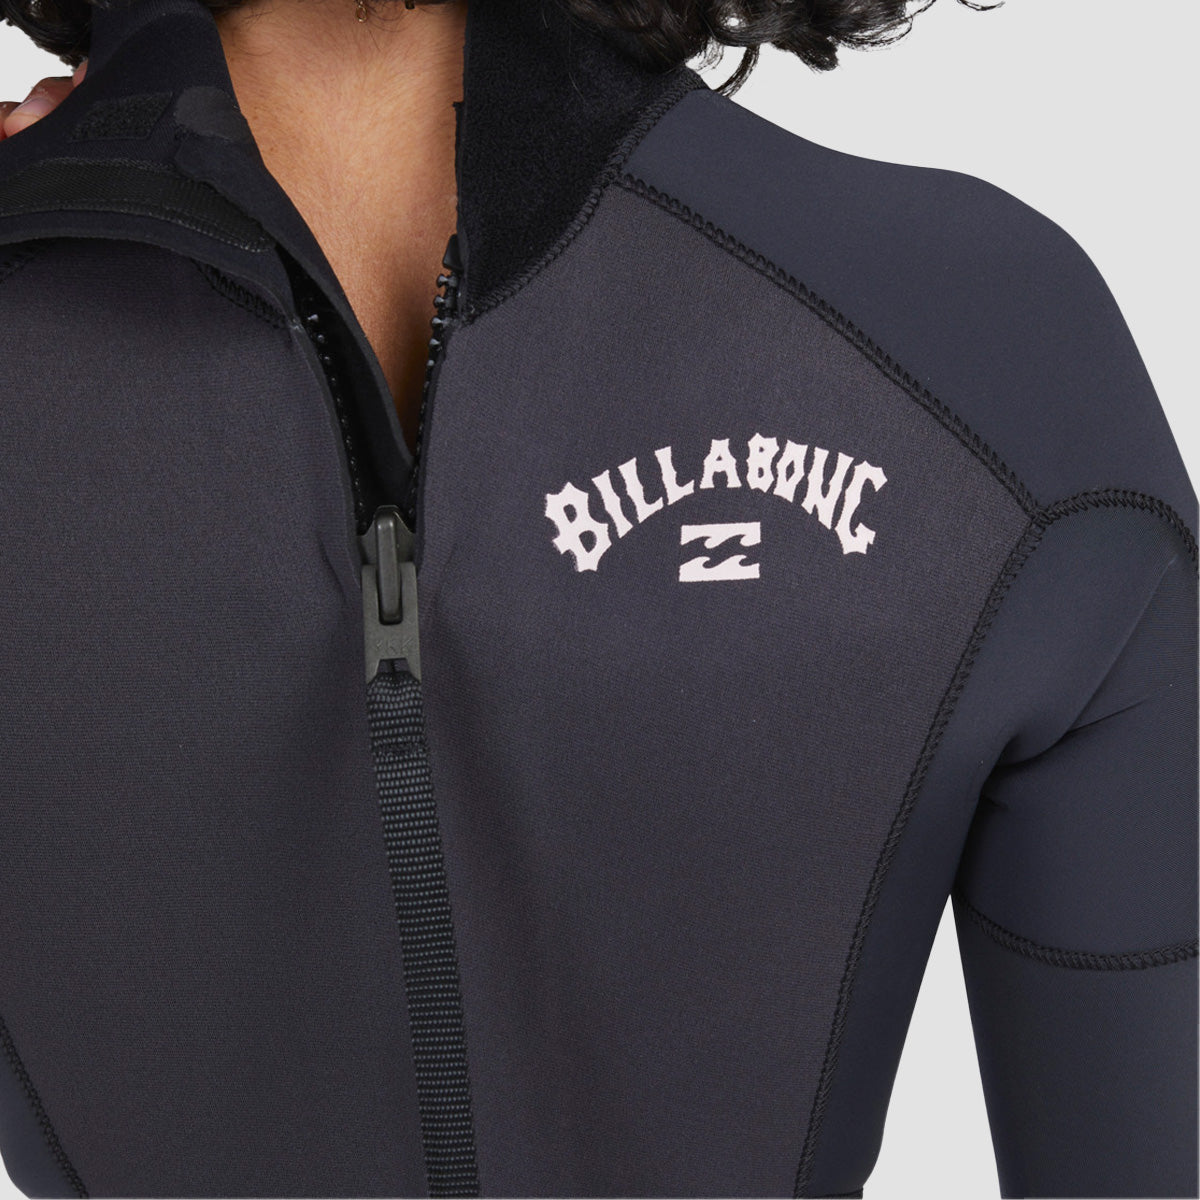 Billabong Launch 3/2mm GBS Back Zip Wetsuit Black - Womens